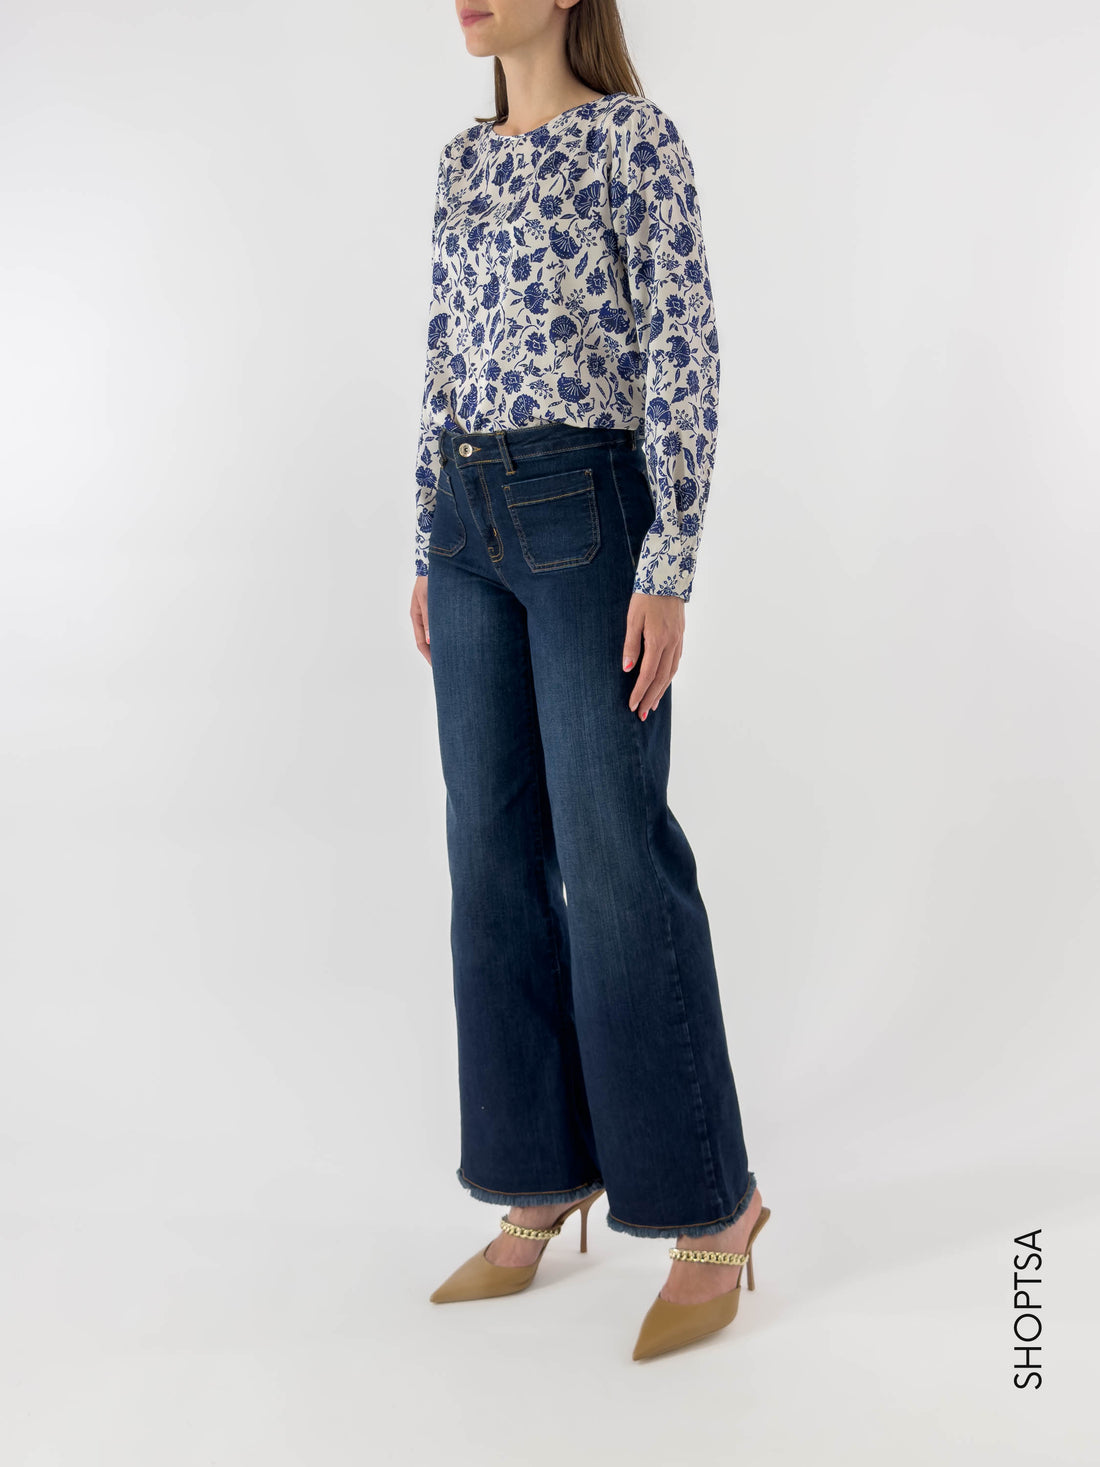 LUXURY patterned blouse - EMME Marella